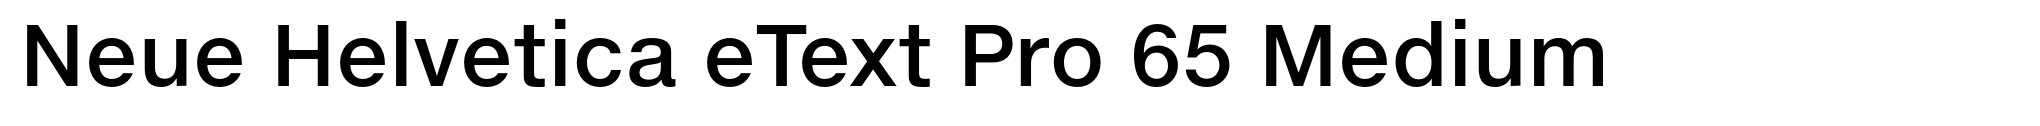 Neue Helvetica eText Pro 65 Medium image